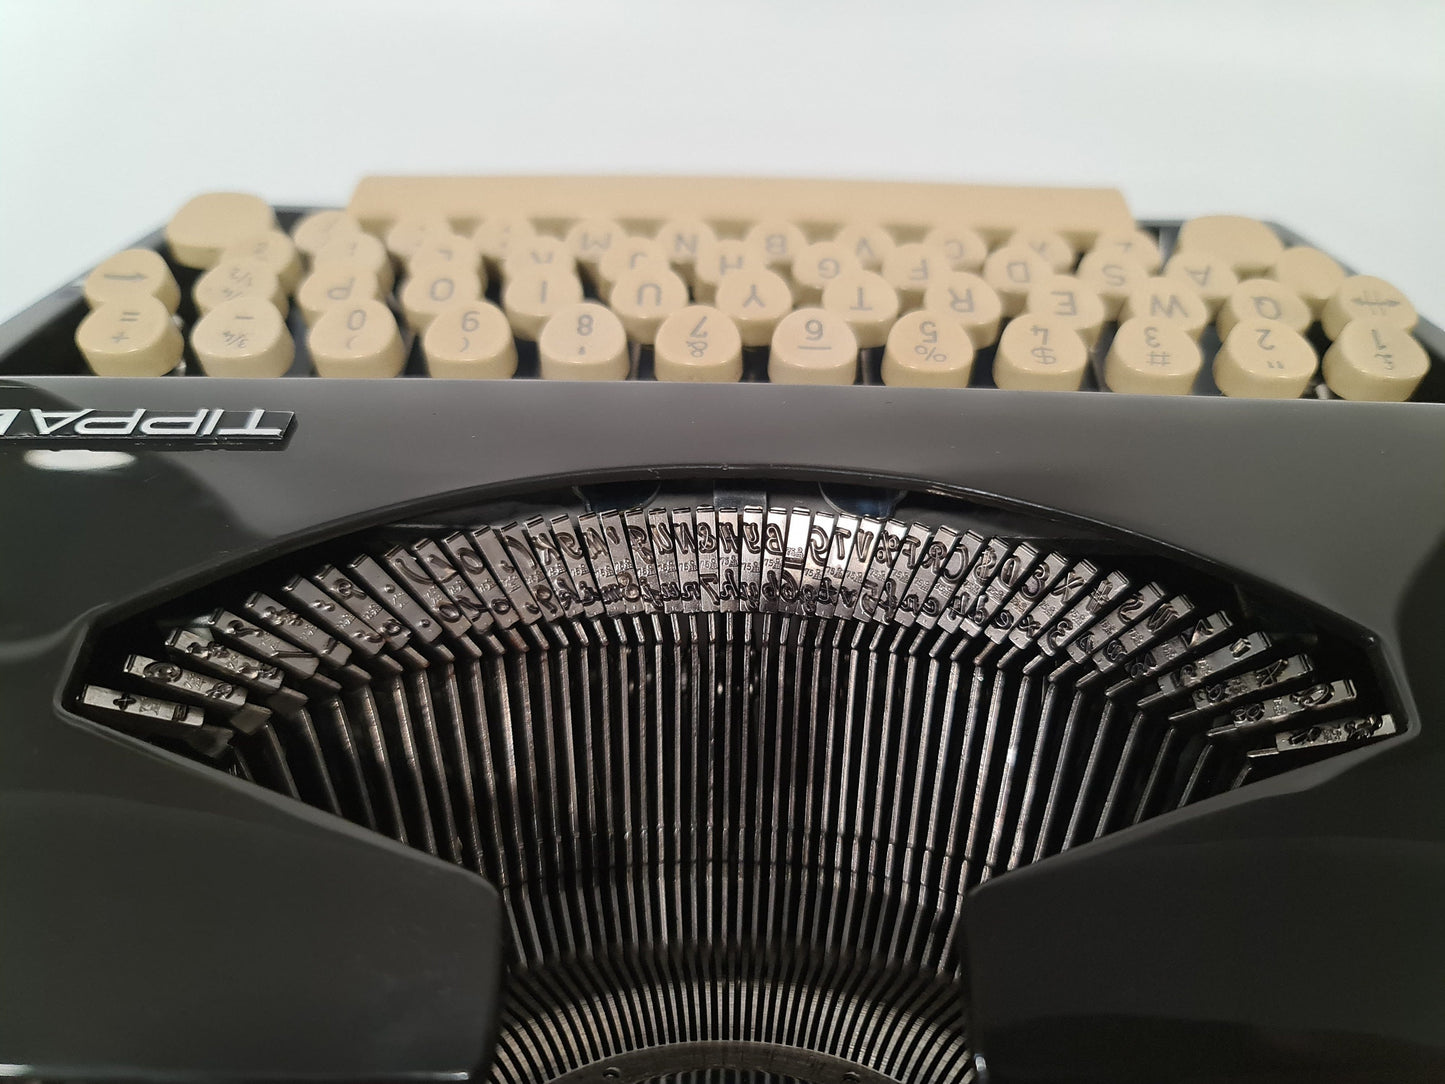 CURSIVE FONT - Tippa S Black & Yel Typewriter, Vintage, Mint Condition, Professionally Serviced